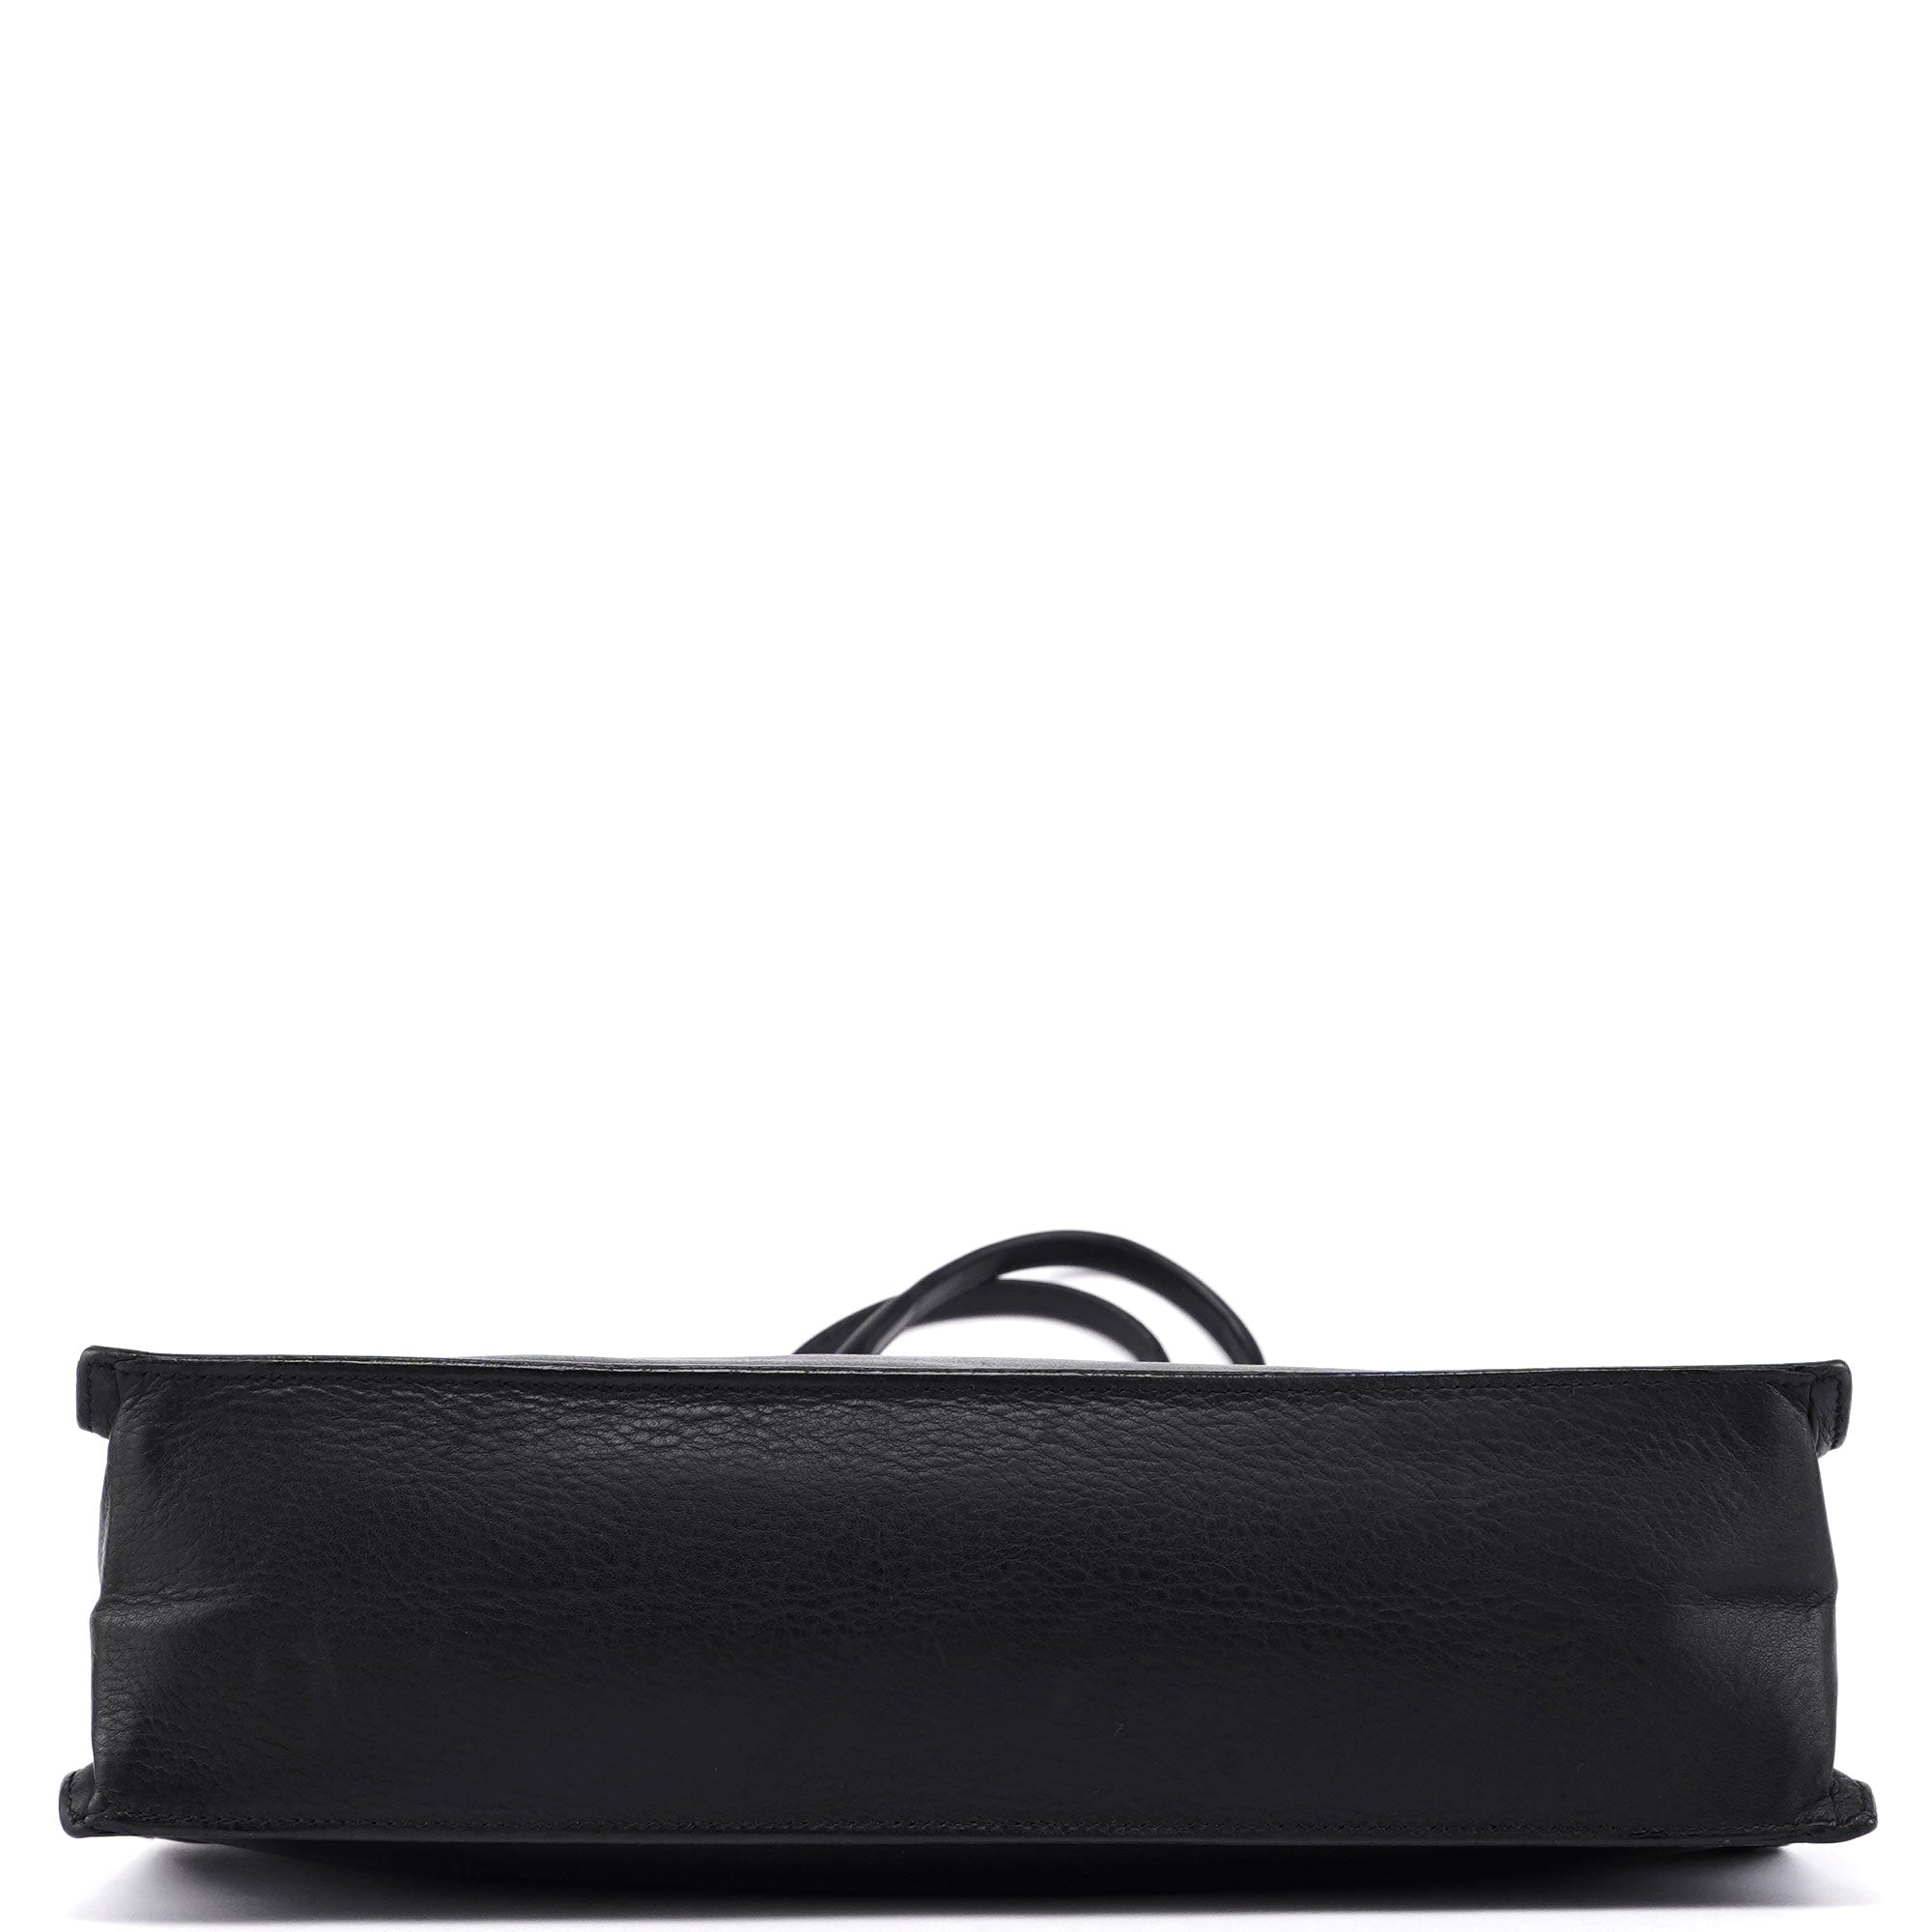 Gucci Black Calfskin Drawstring Tote Bag